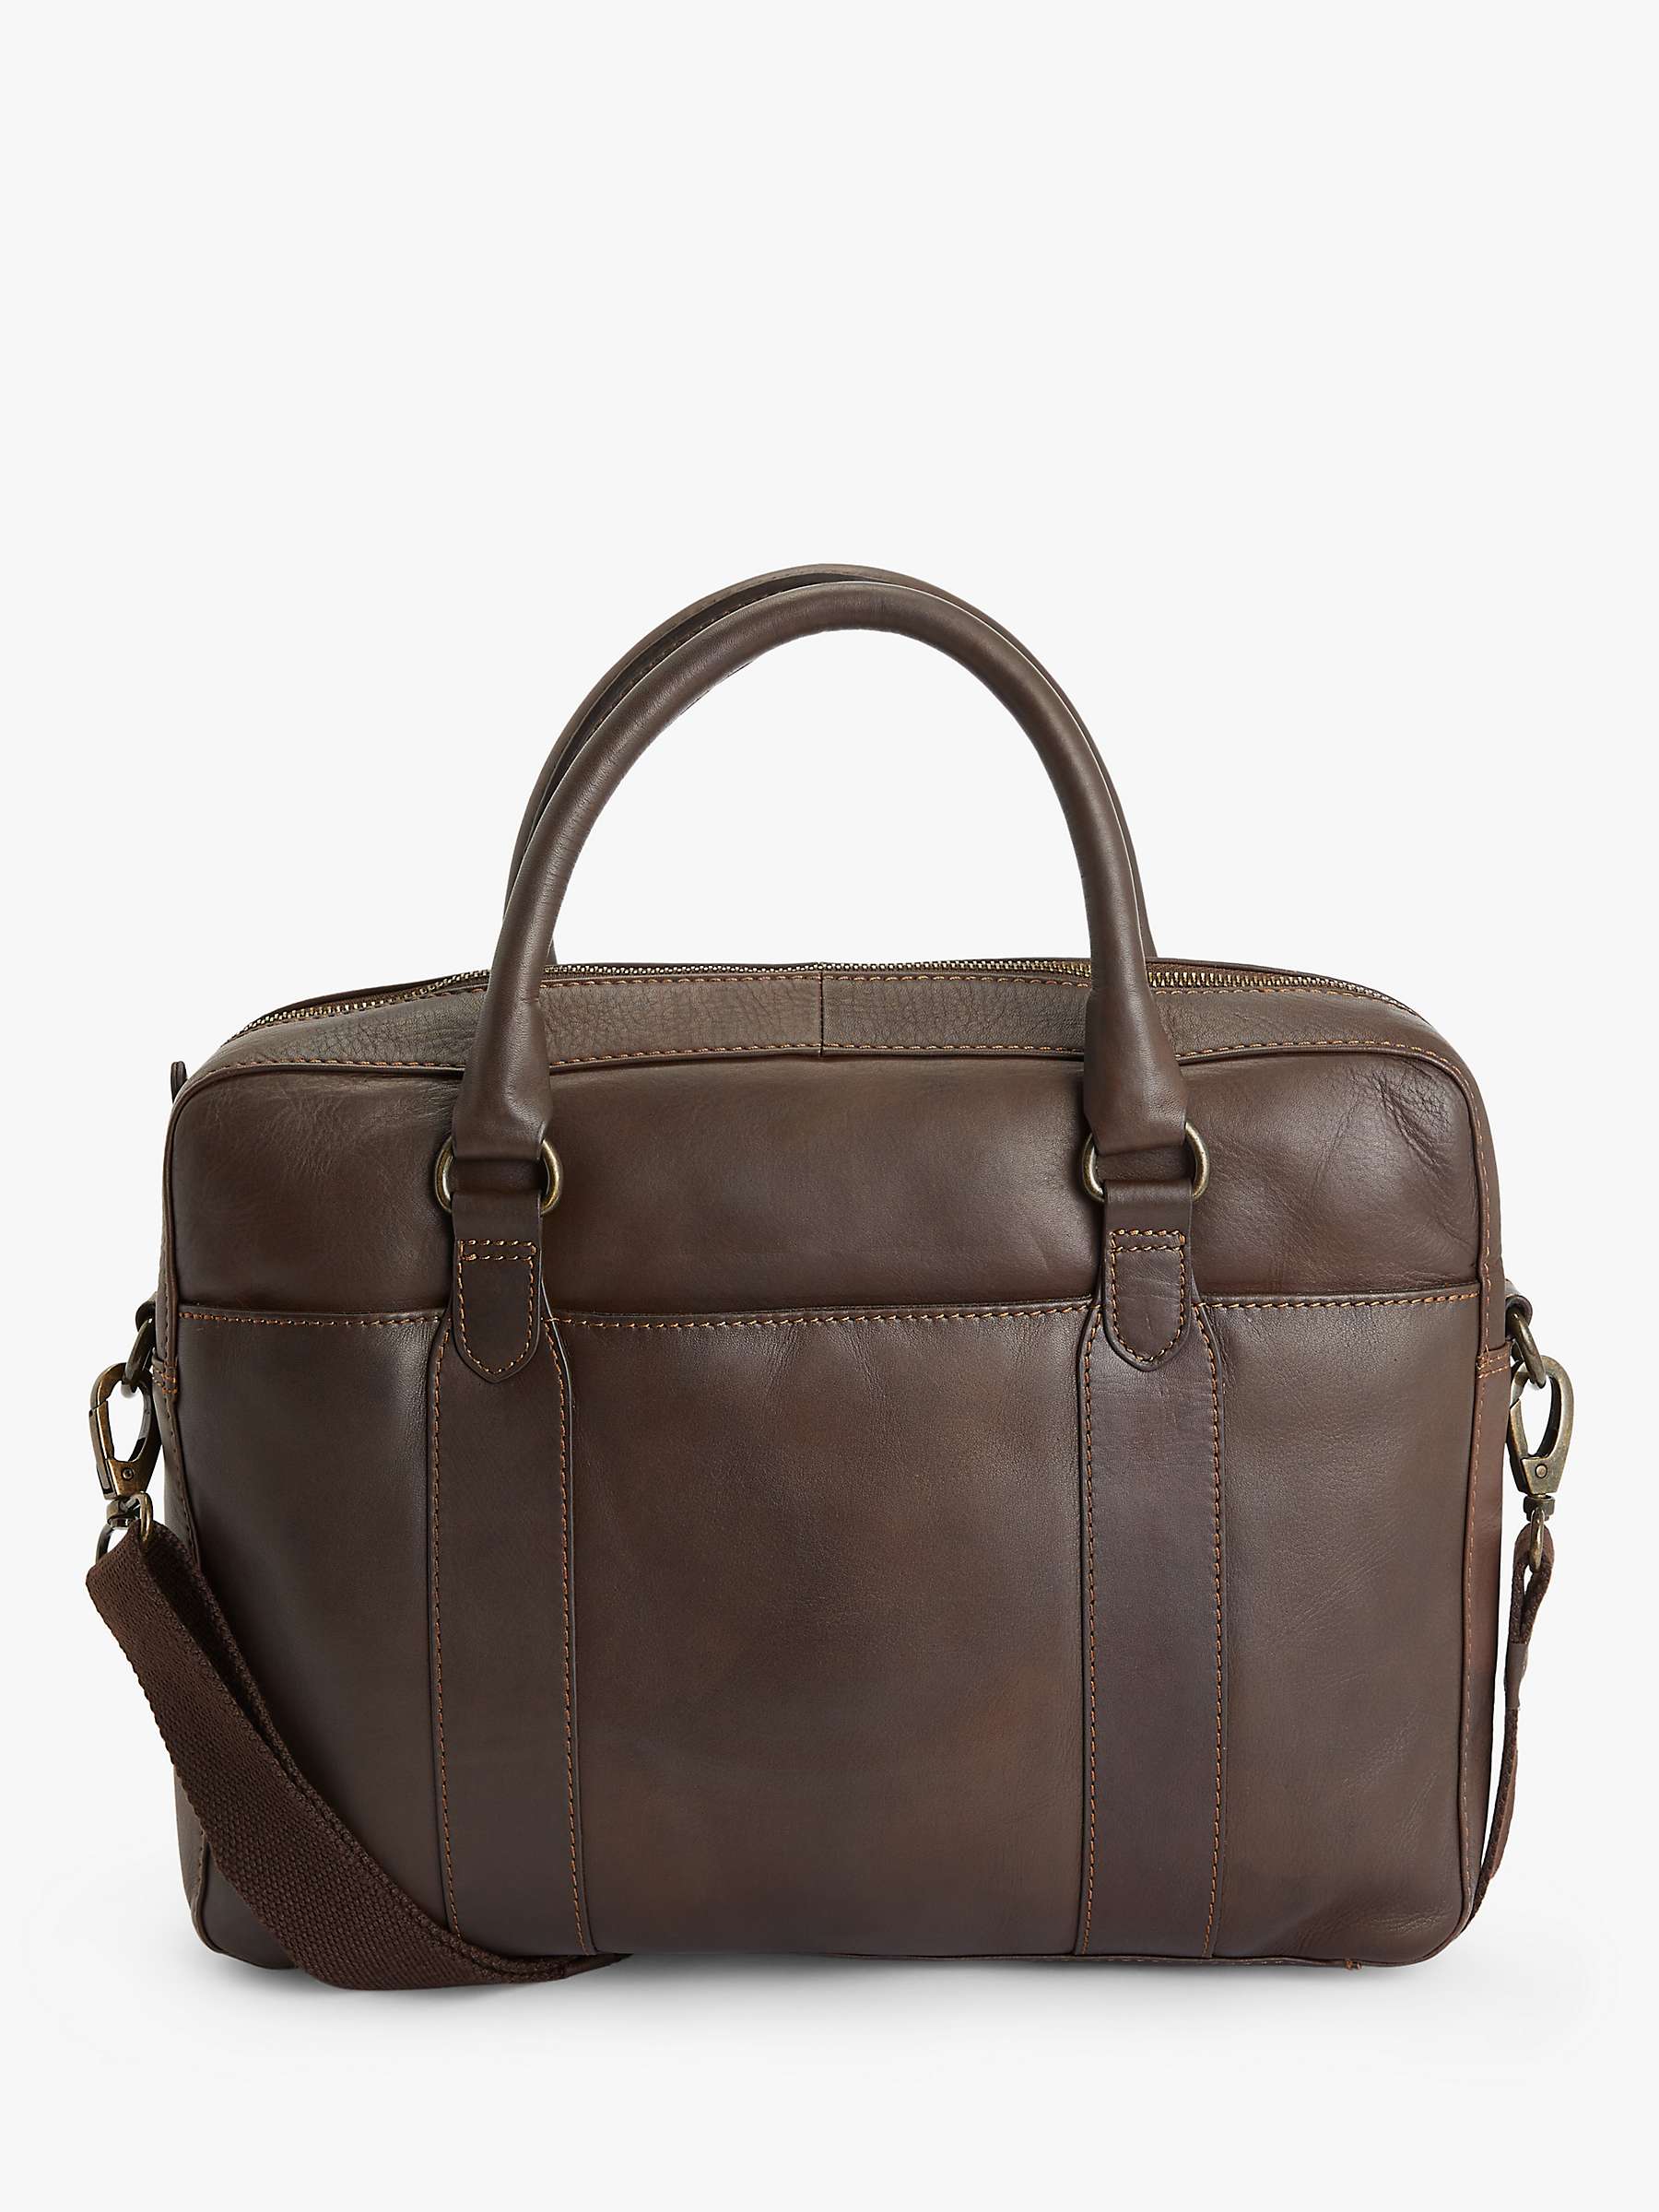 Buy John Lewis Edinburgh Leather Briefcase Online at johnlewis.com